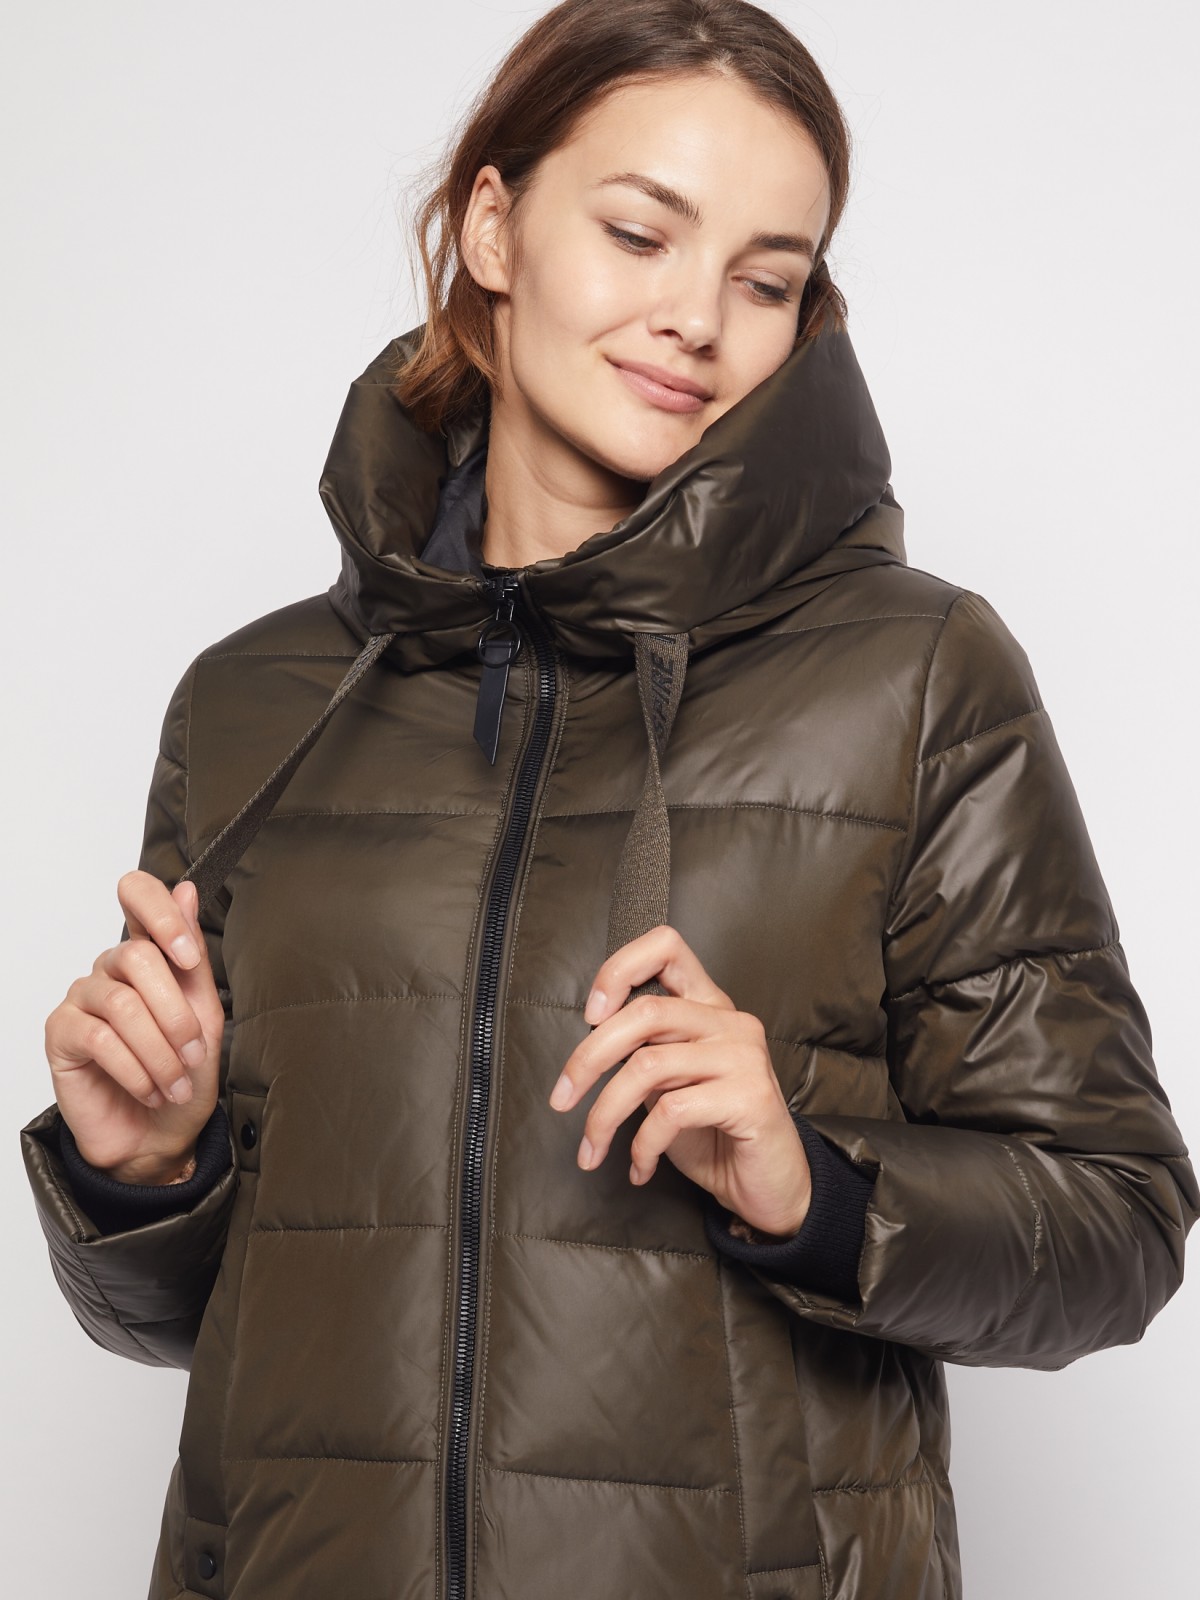 Утеплённое пальто с капюшоном zolla 020345212064, цвет хаки, размер XS - фото 4